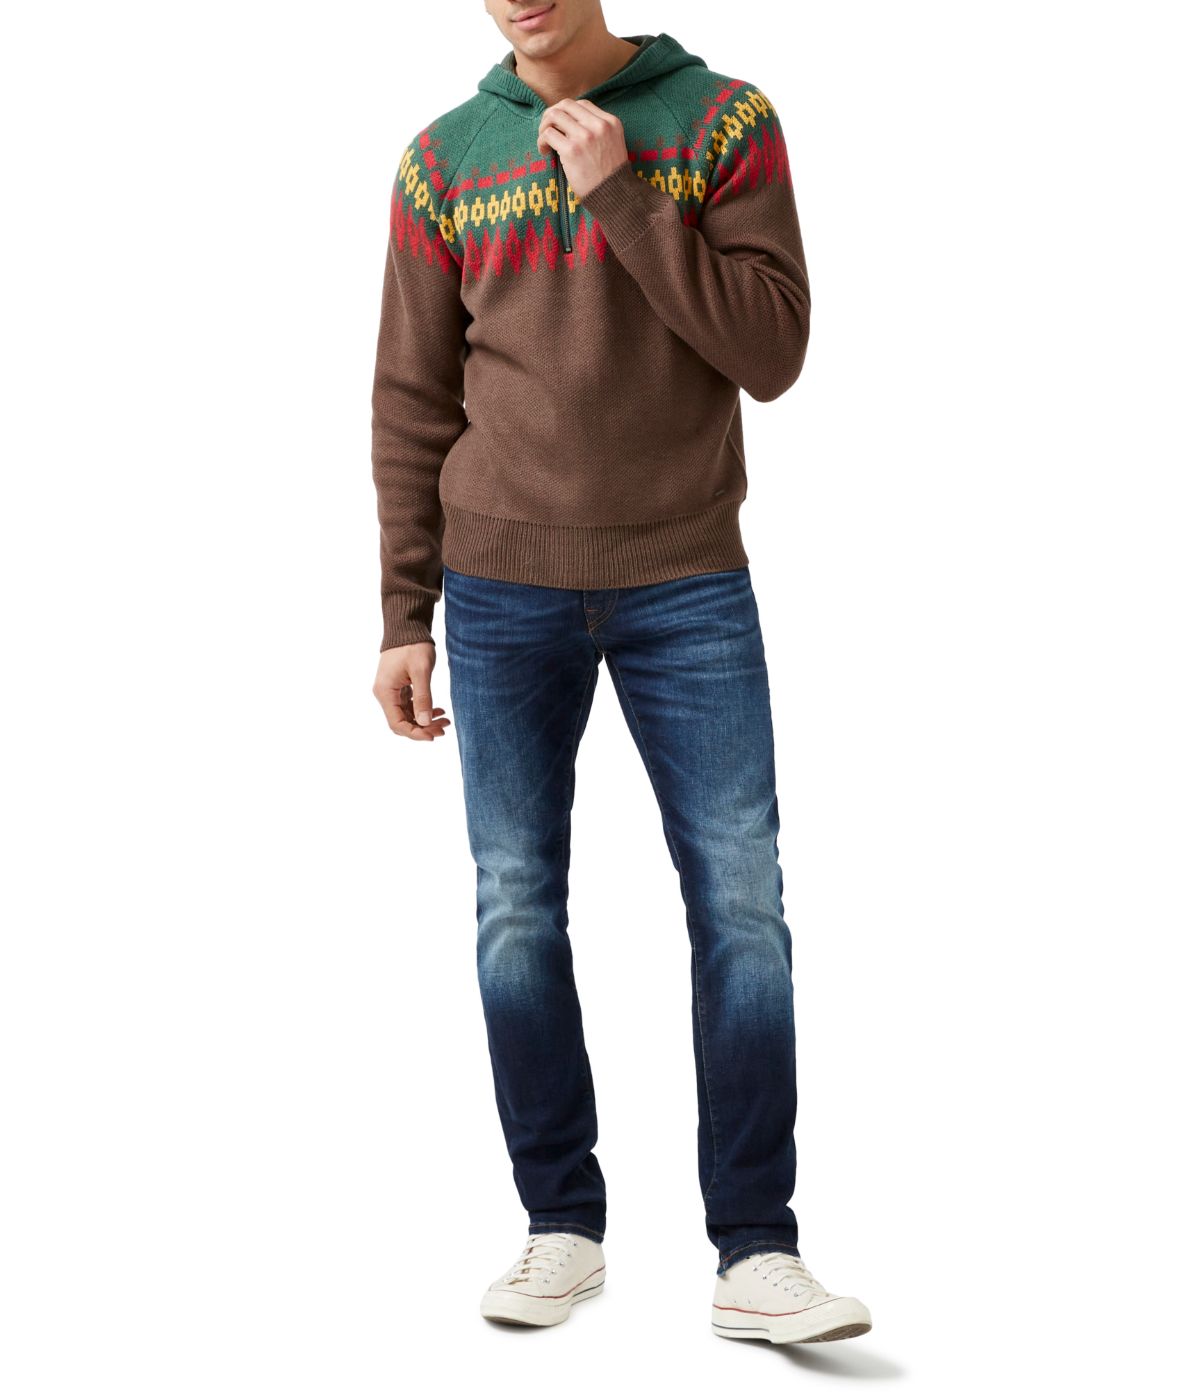 Wunord Pullover Sweater